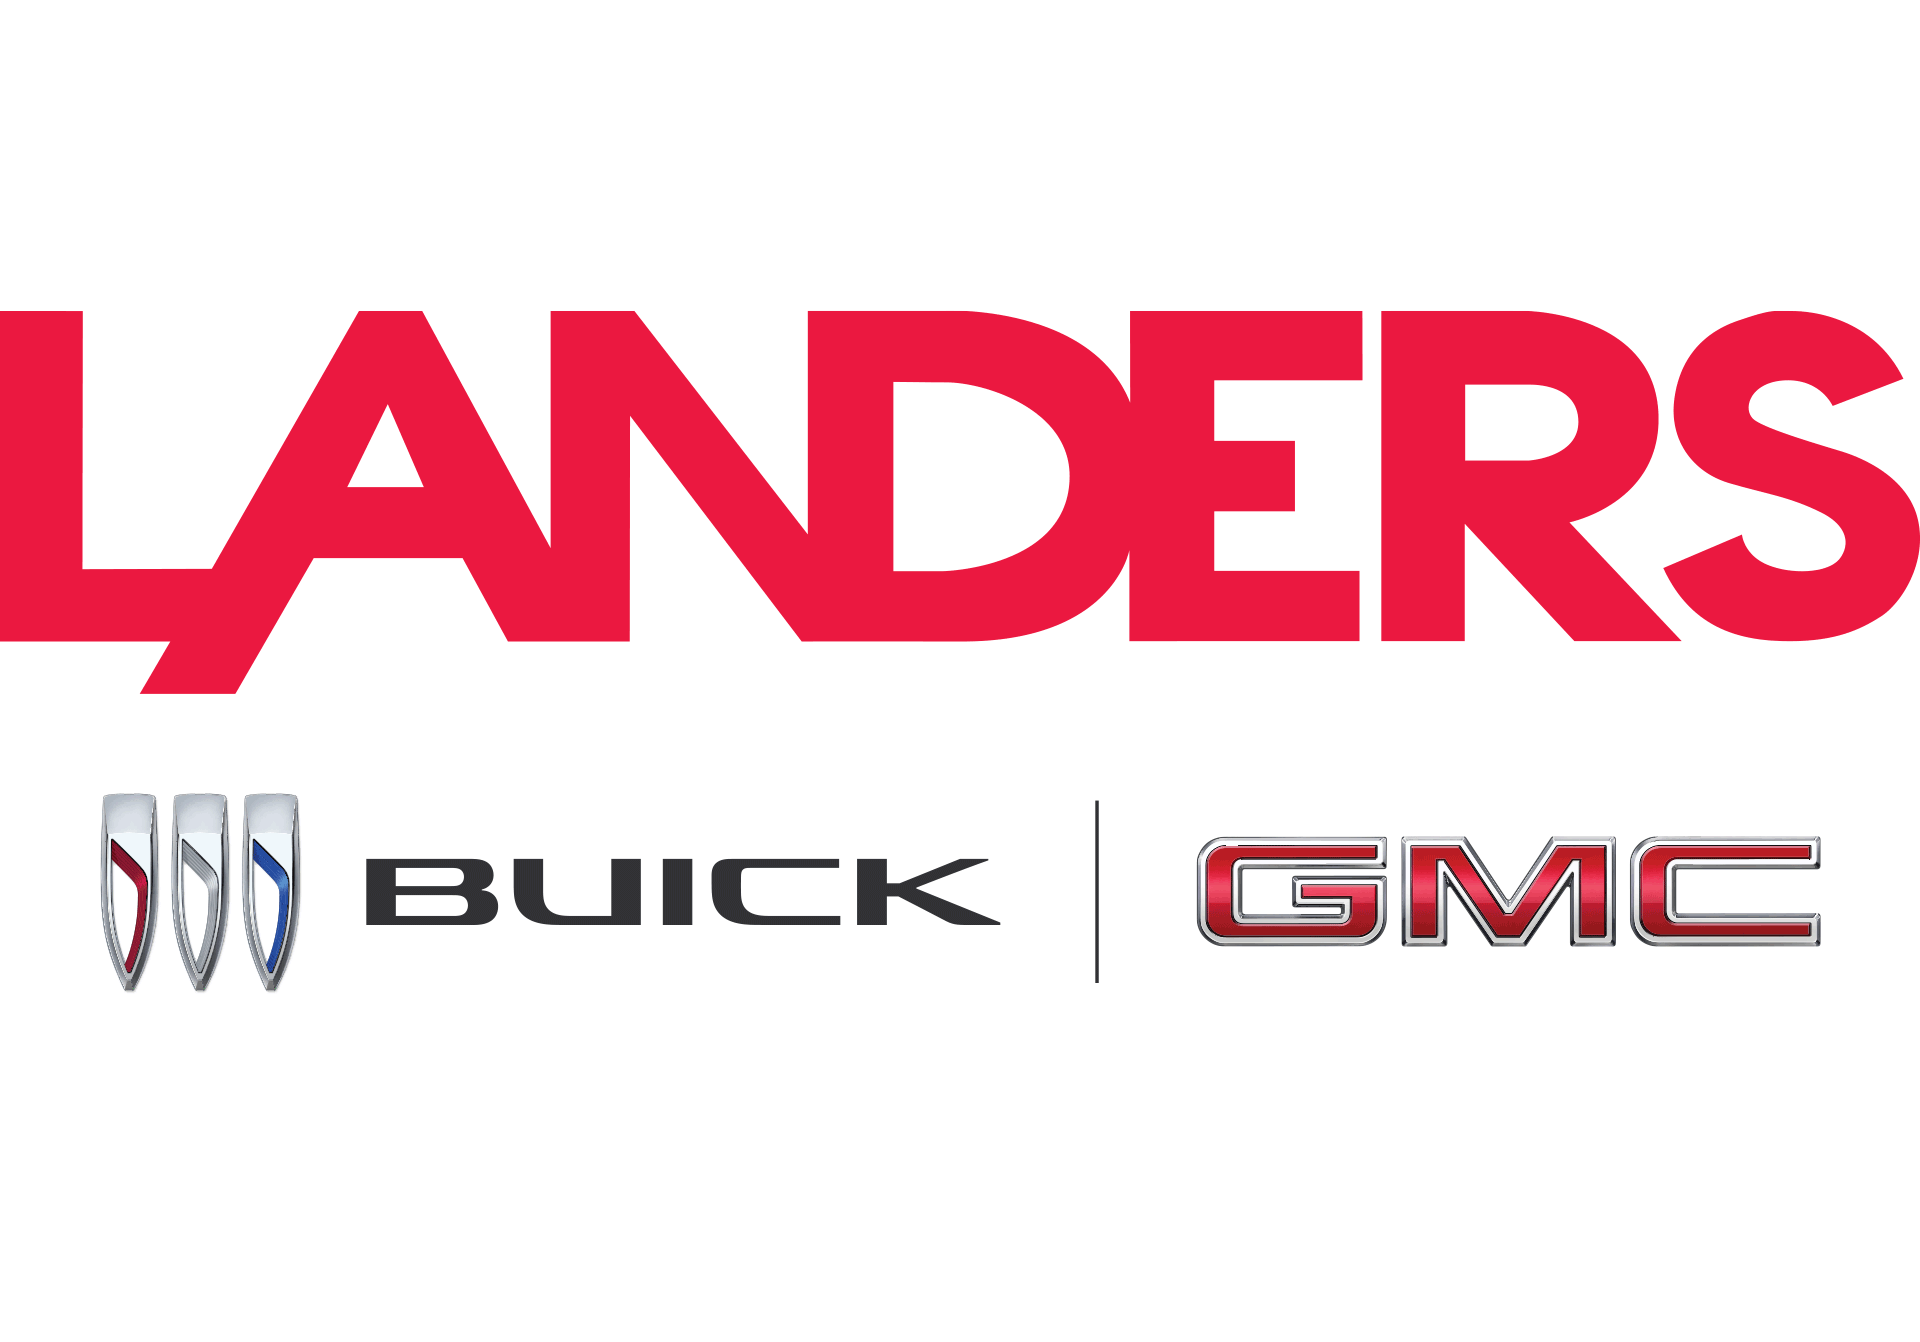 Landers Buick GMC